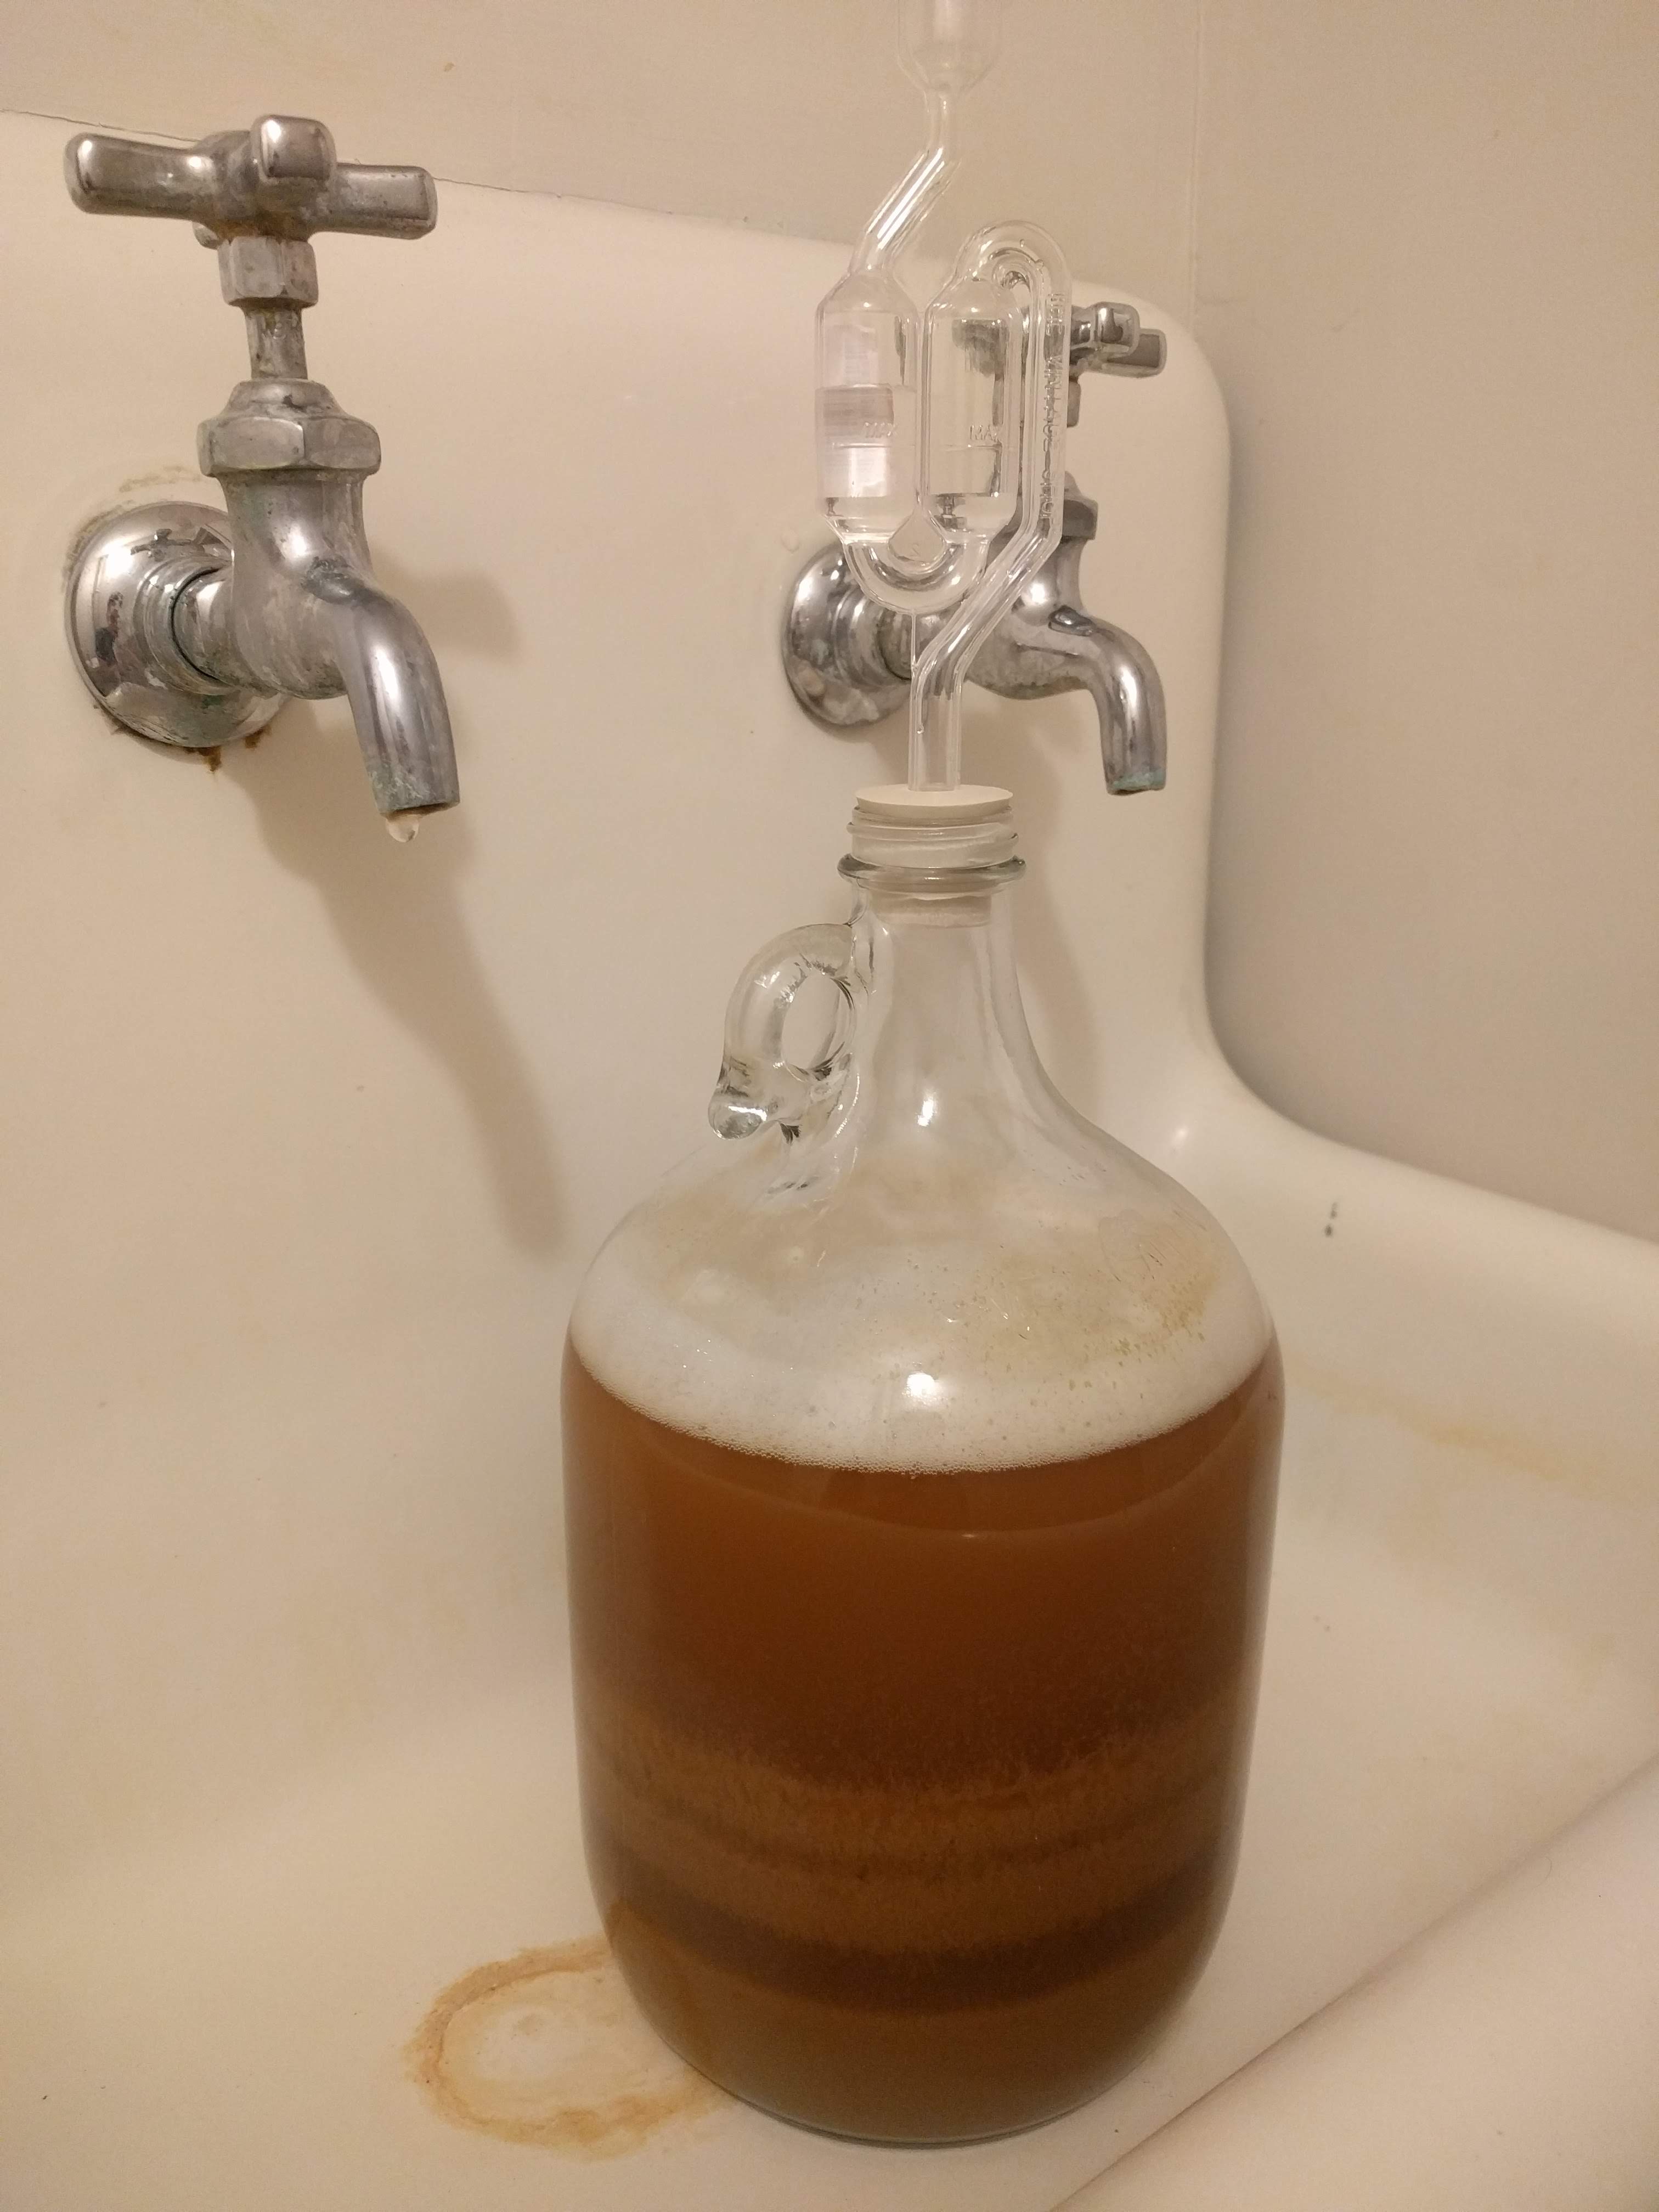 first homebrew fermenting